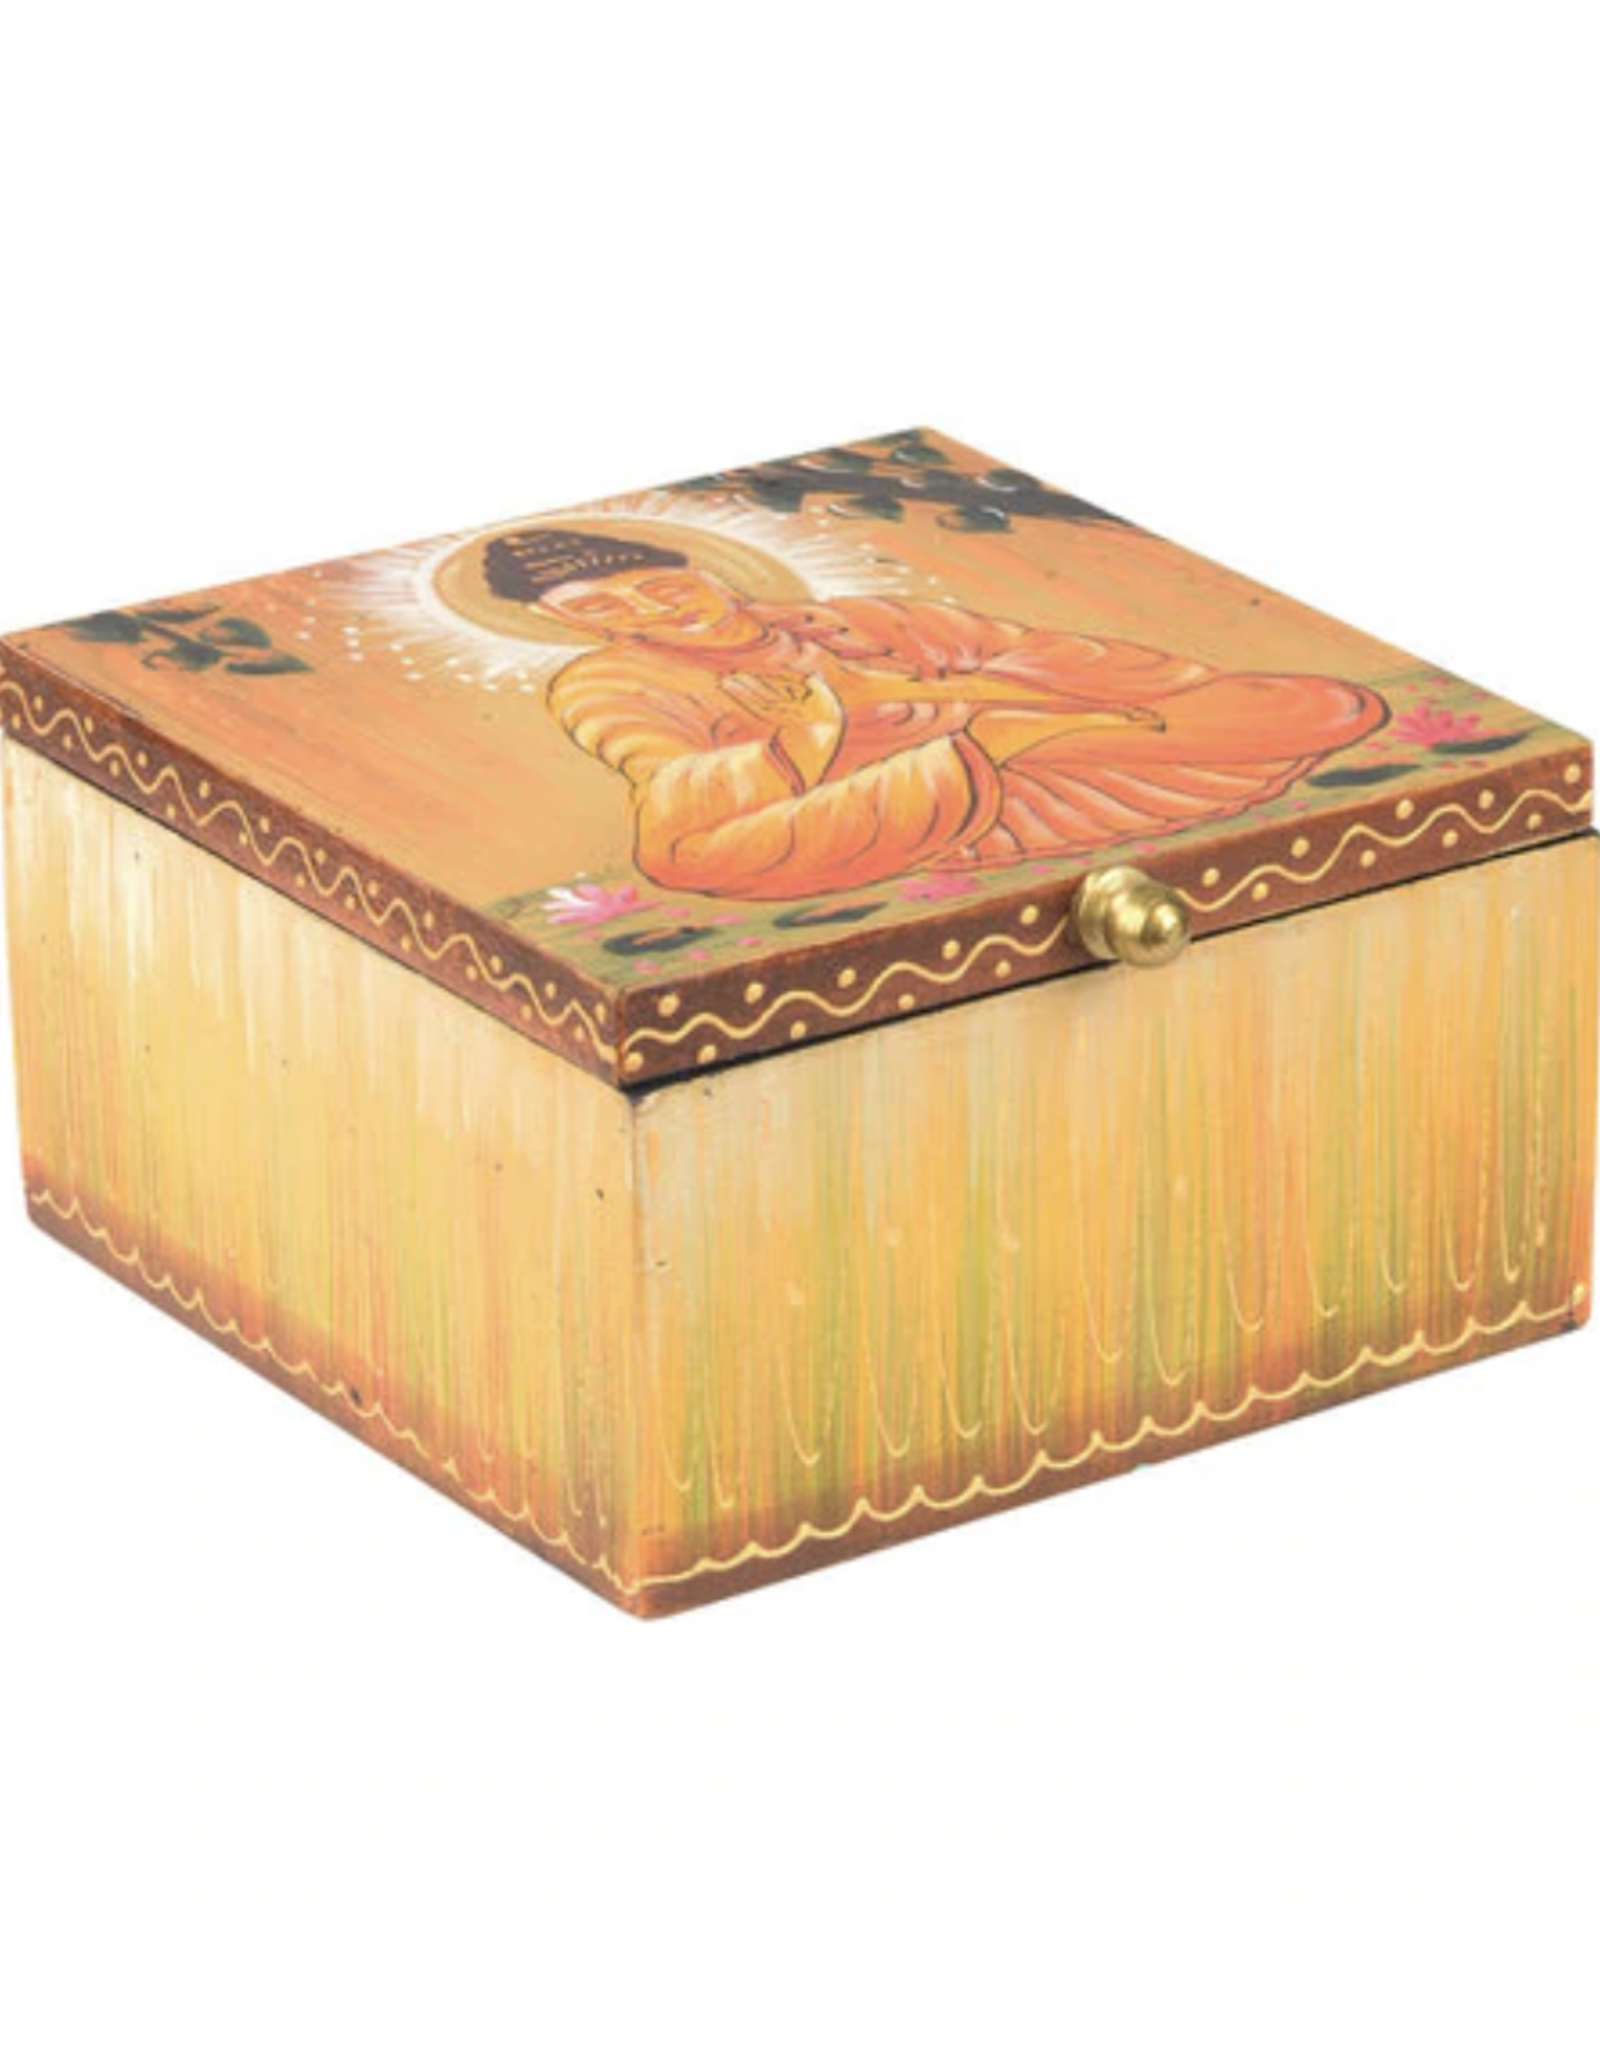 5" x 5" Hand Painted Wooden Box - Buddha